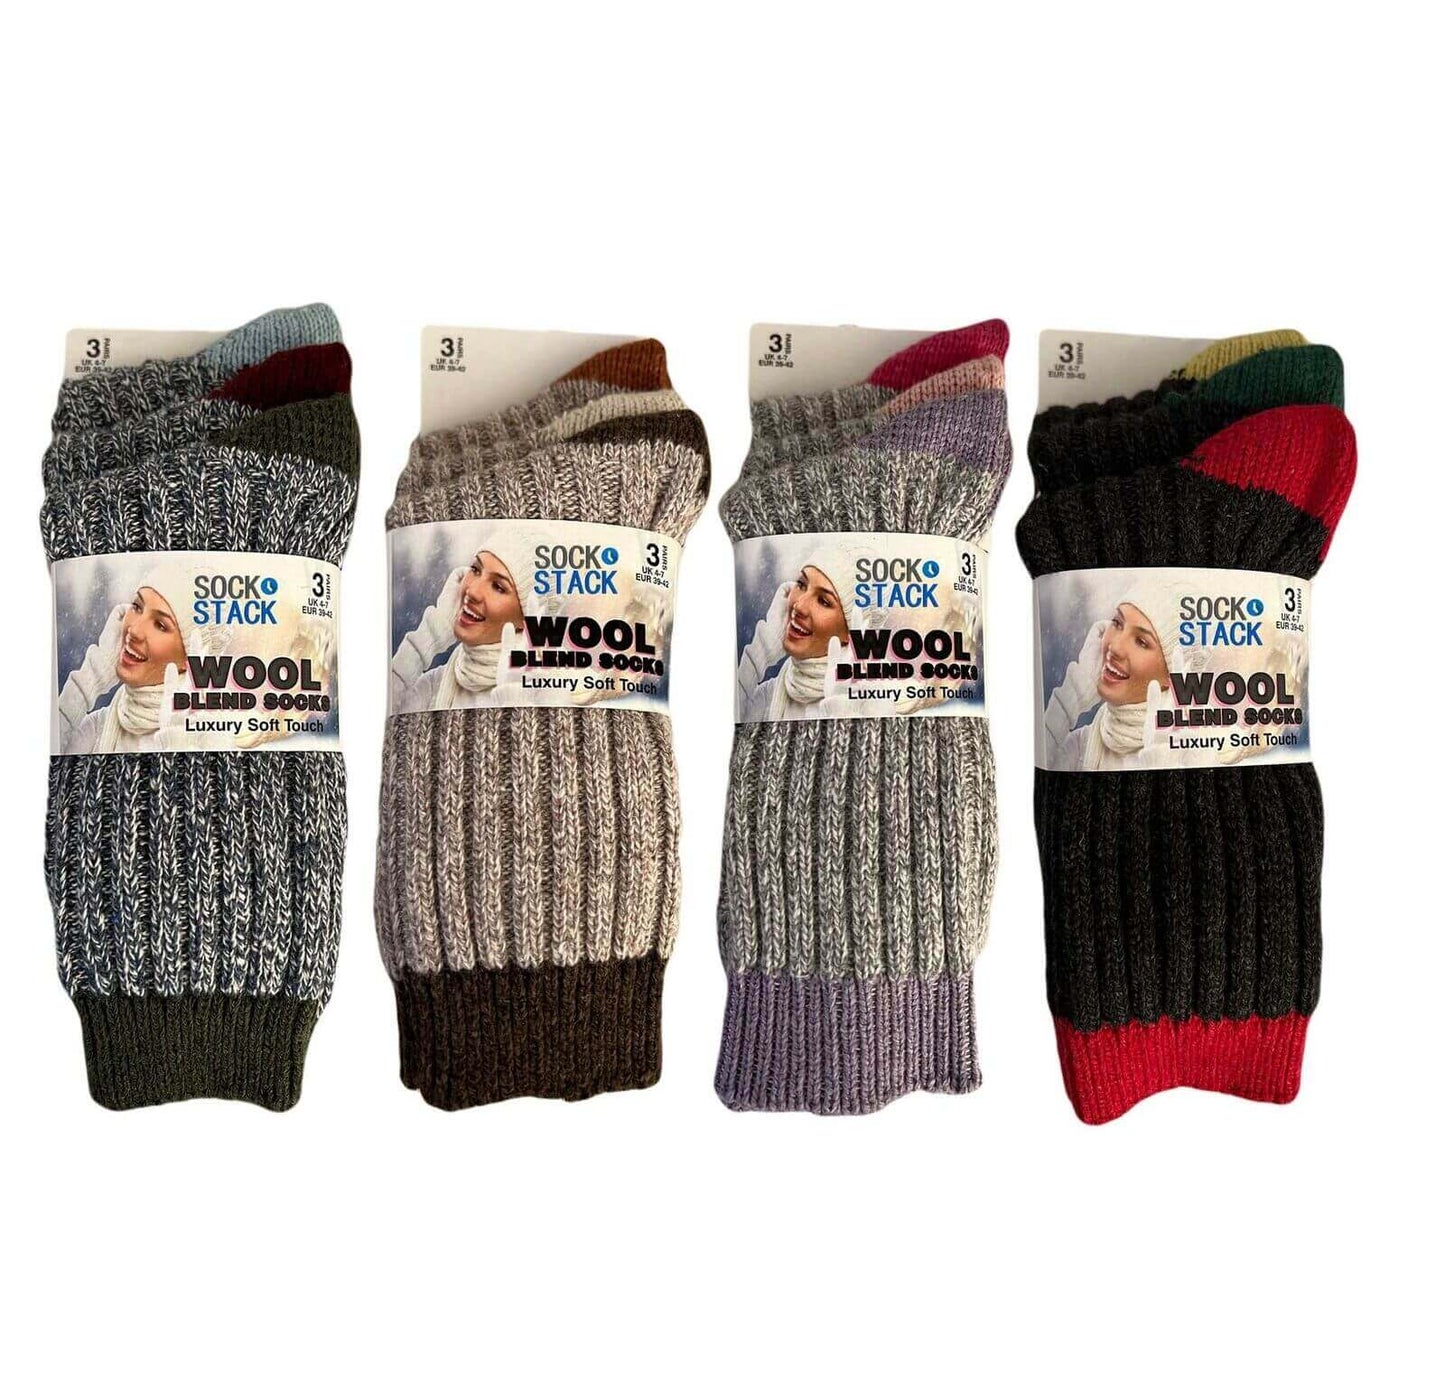 6 Pairs Of Women's Chunky Wool Socks Multi Heel & Toe Work Boot Outdoor Sock. Buy now for £8.00. A Socks by Sock Stack. 4-7, assorted, black, black socks, boot, boot socks, chunky, fluffy, footwear, grey, grey socks, hiking, home, ladies, Lambs wool, lila